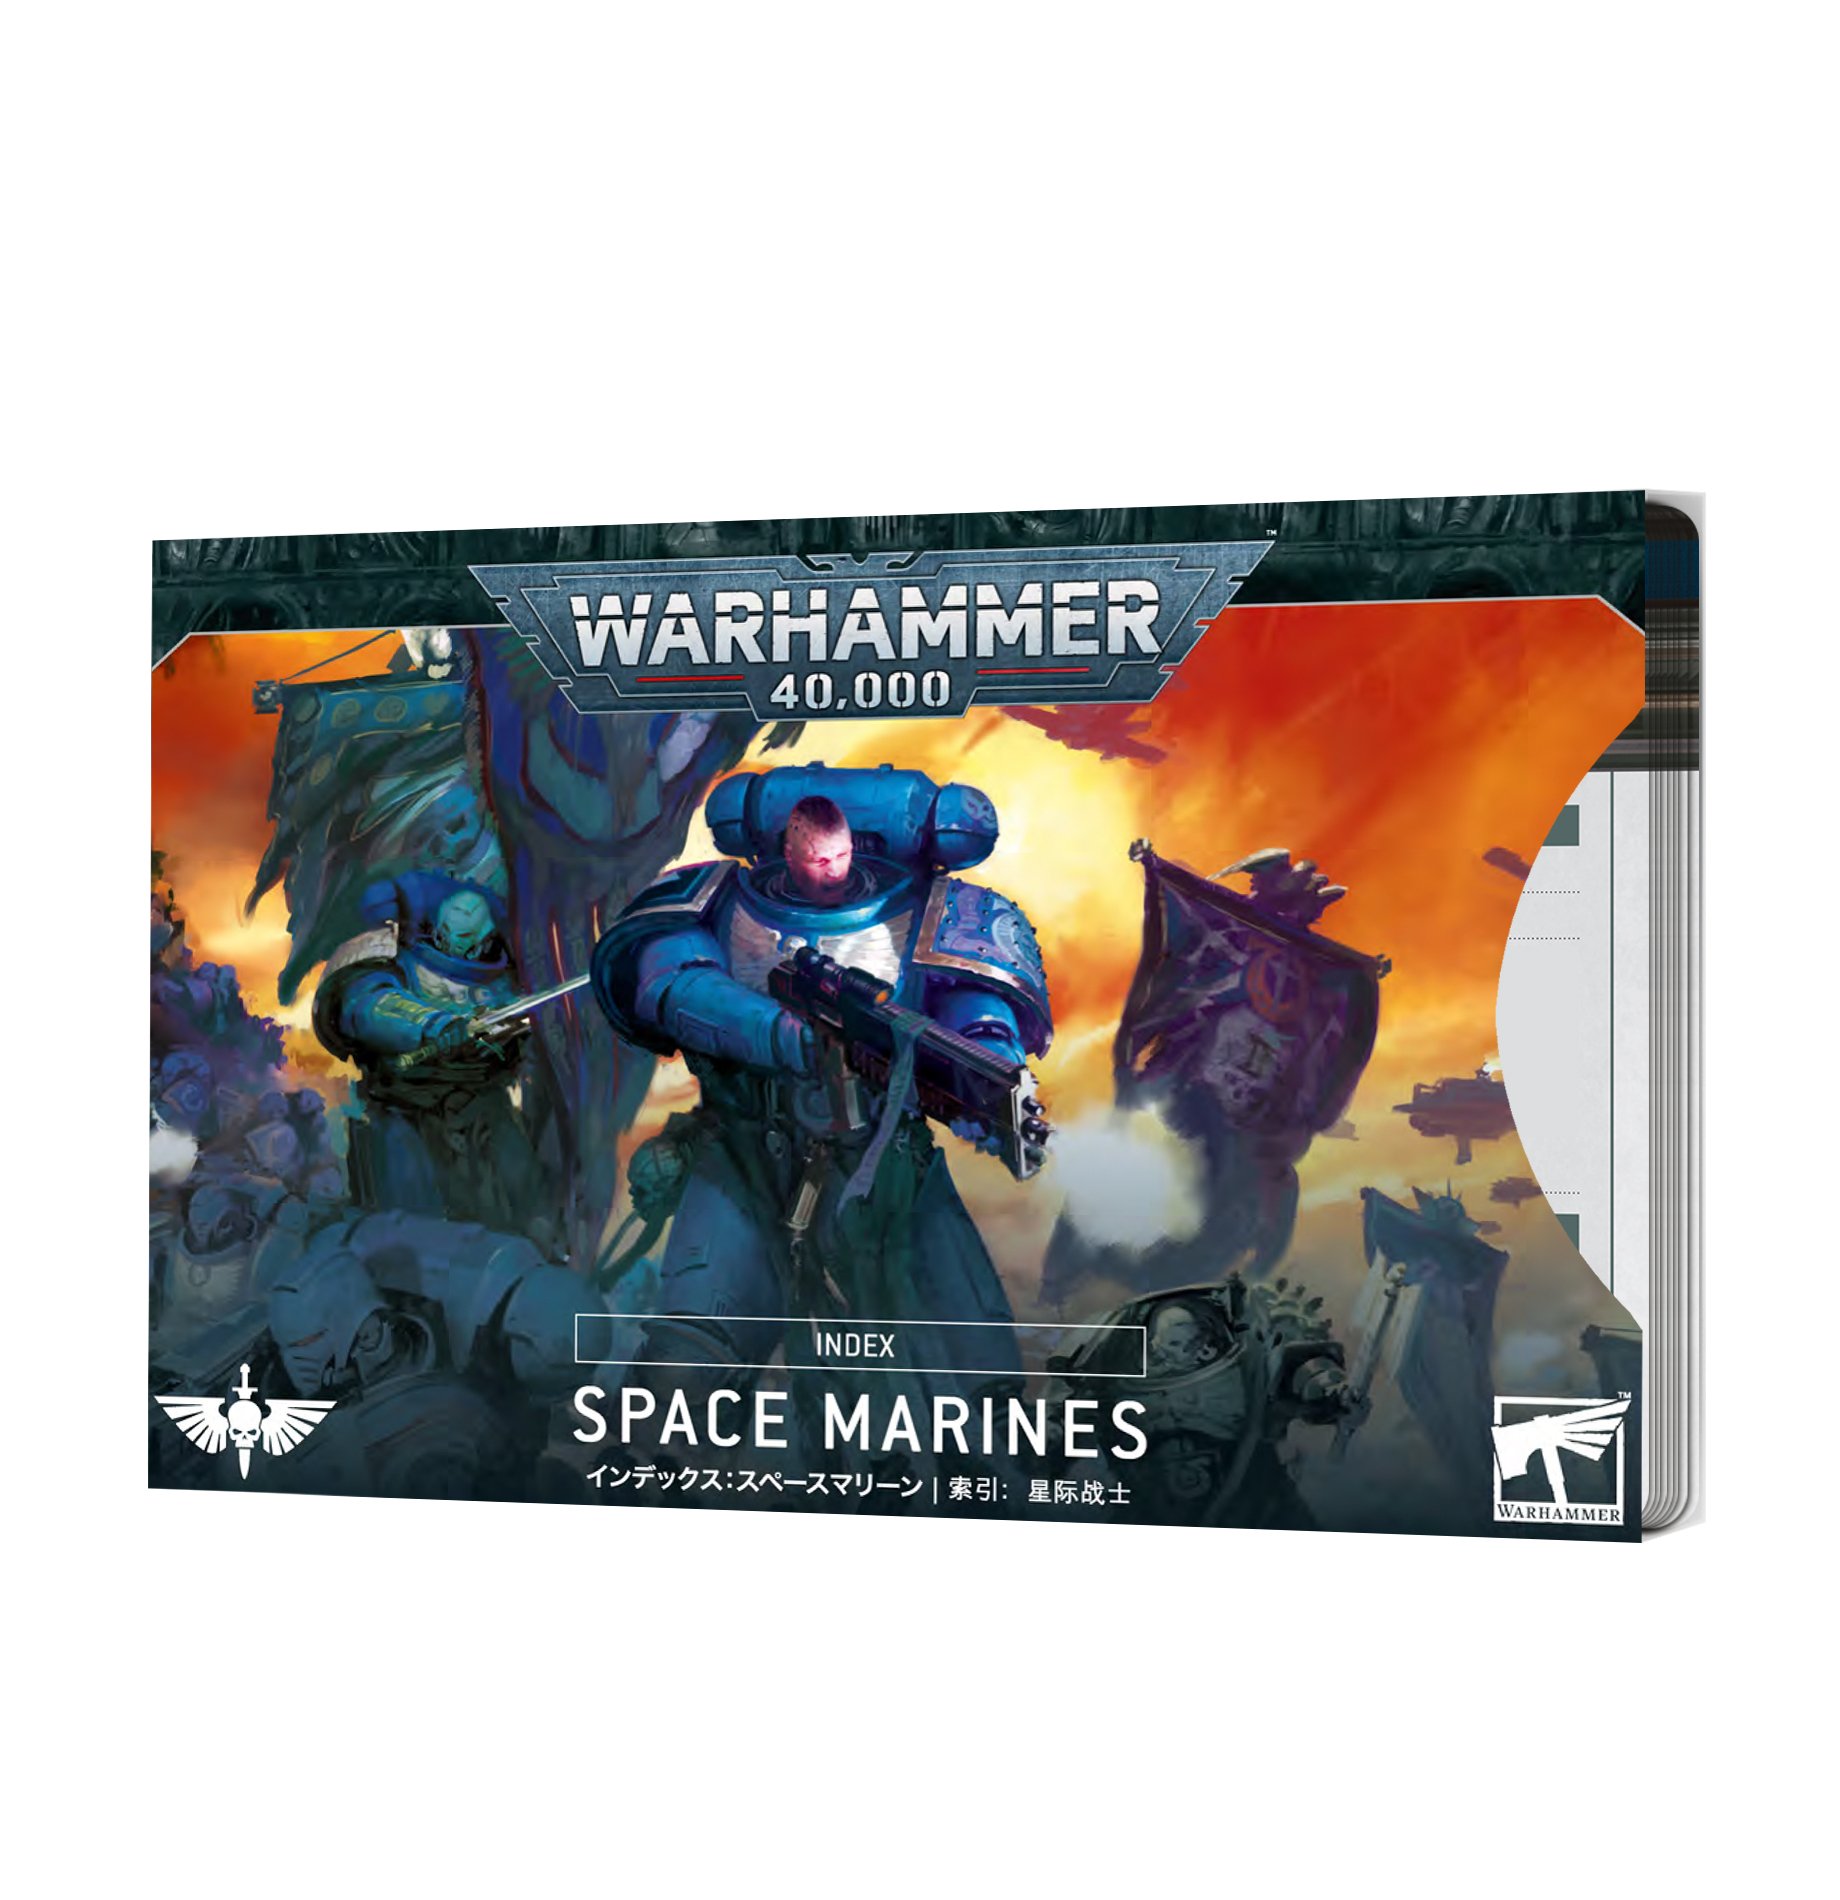 space marine cards